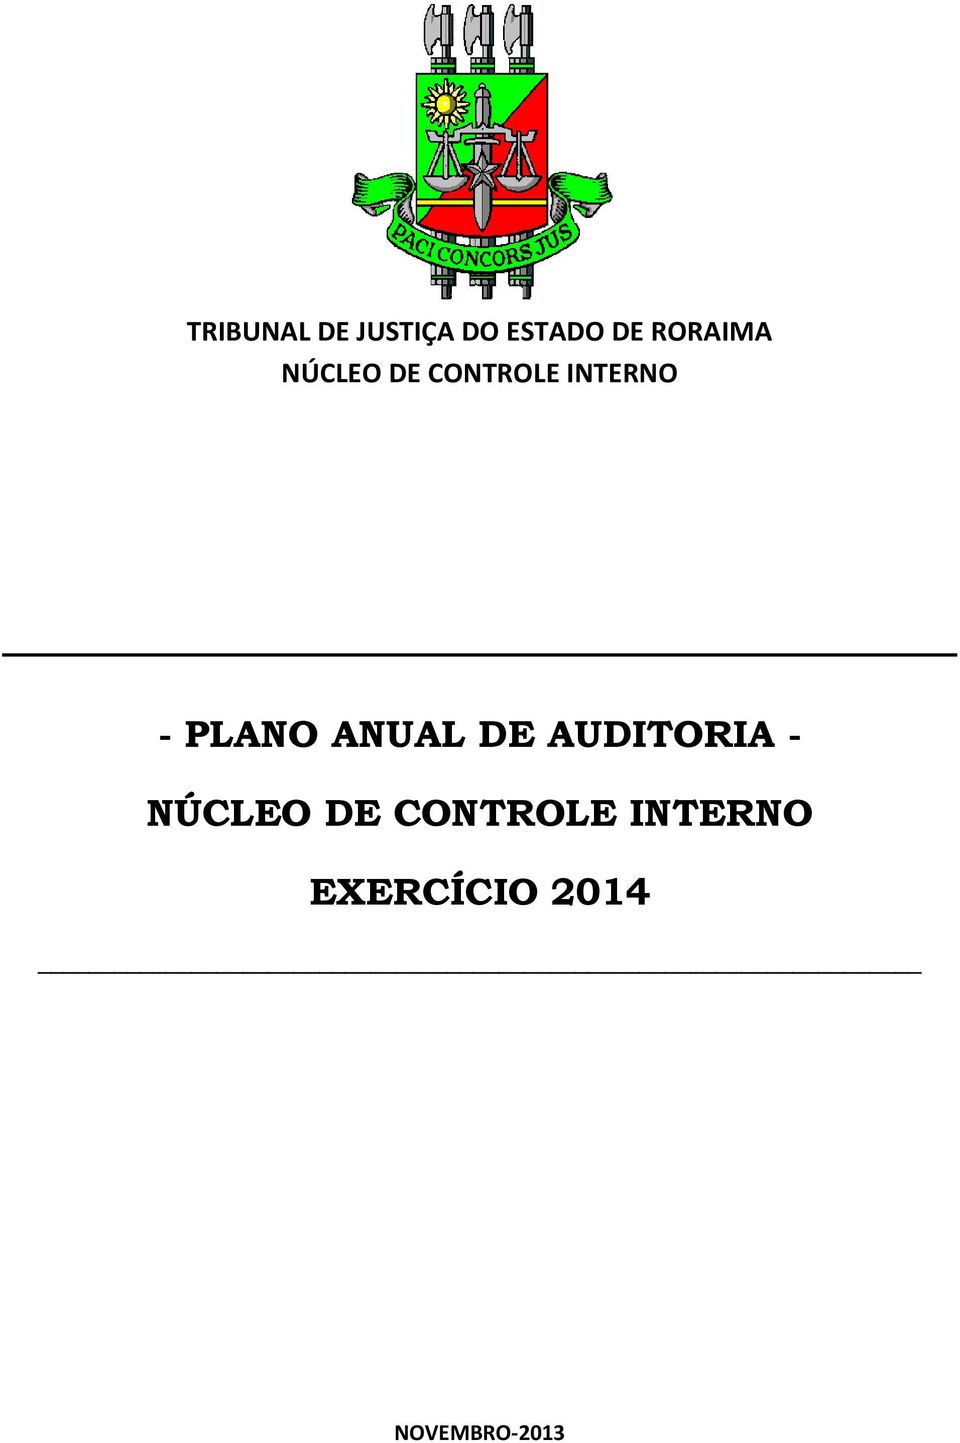 PLANO ANUAL DE AUDITORIA - NÚCLEO DE